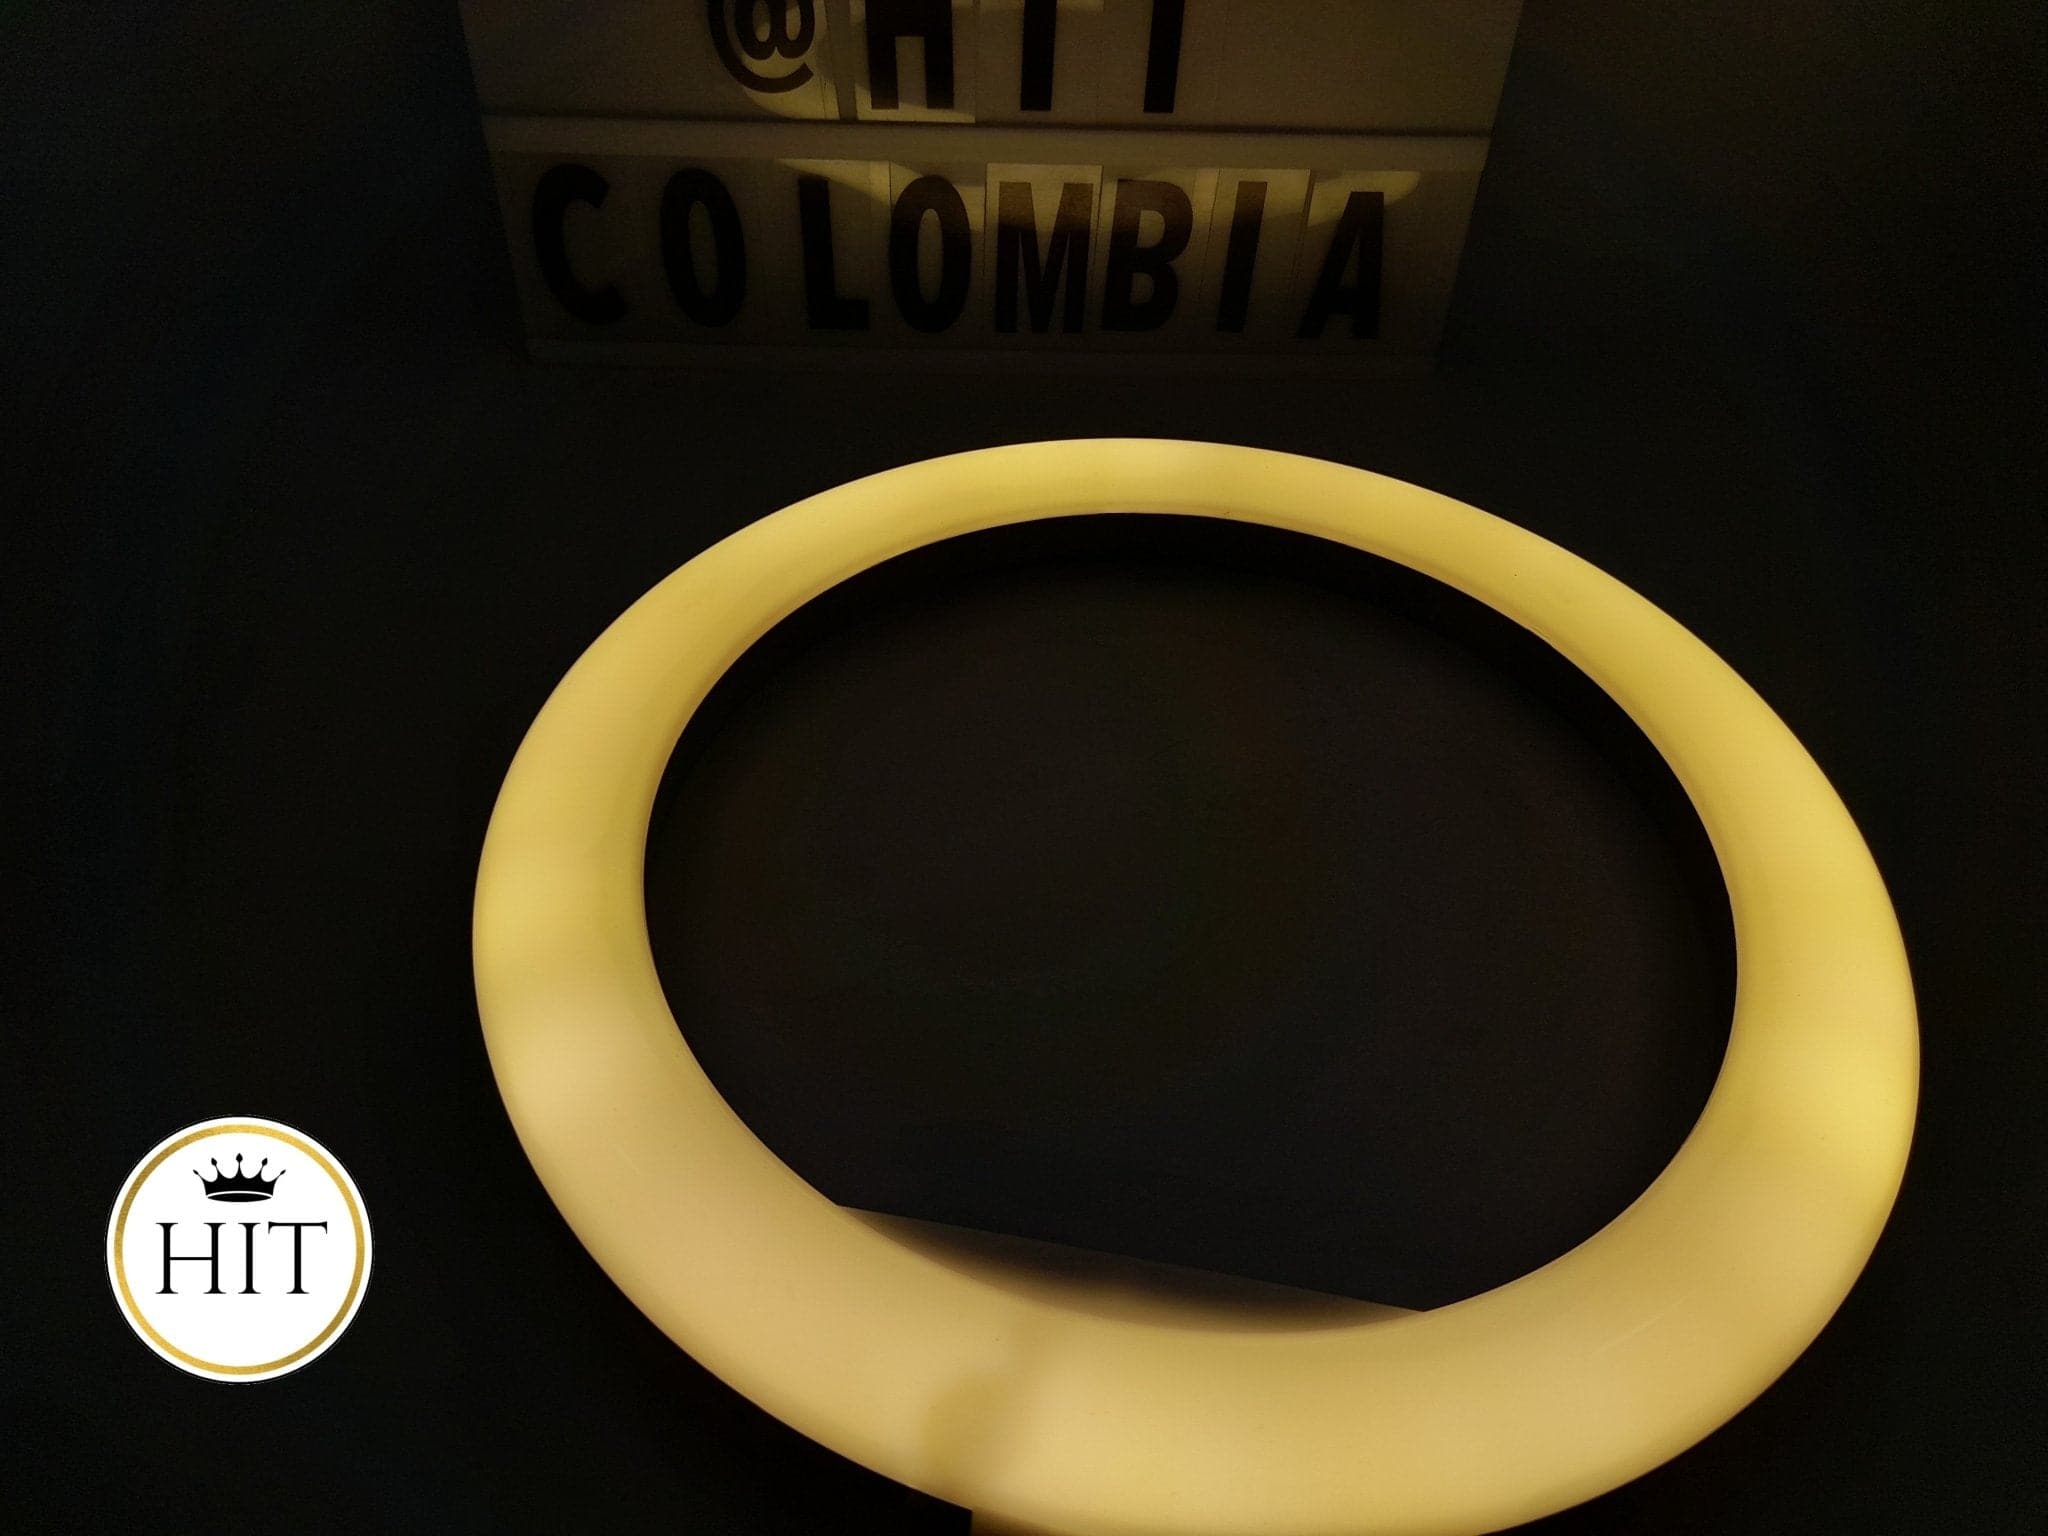 Aro de luz LED- RGB Semiprofesional 30cm - colombiahit